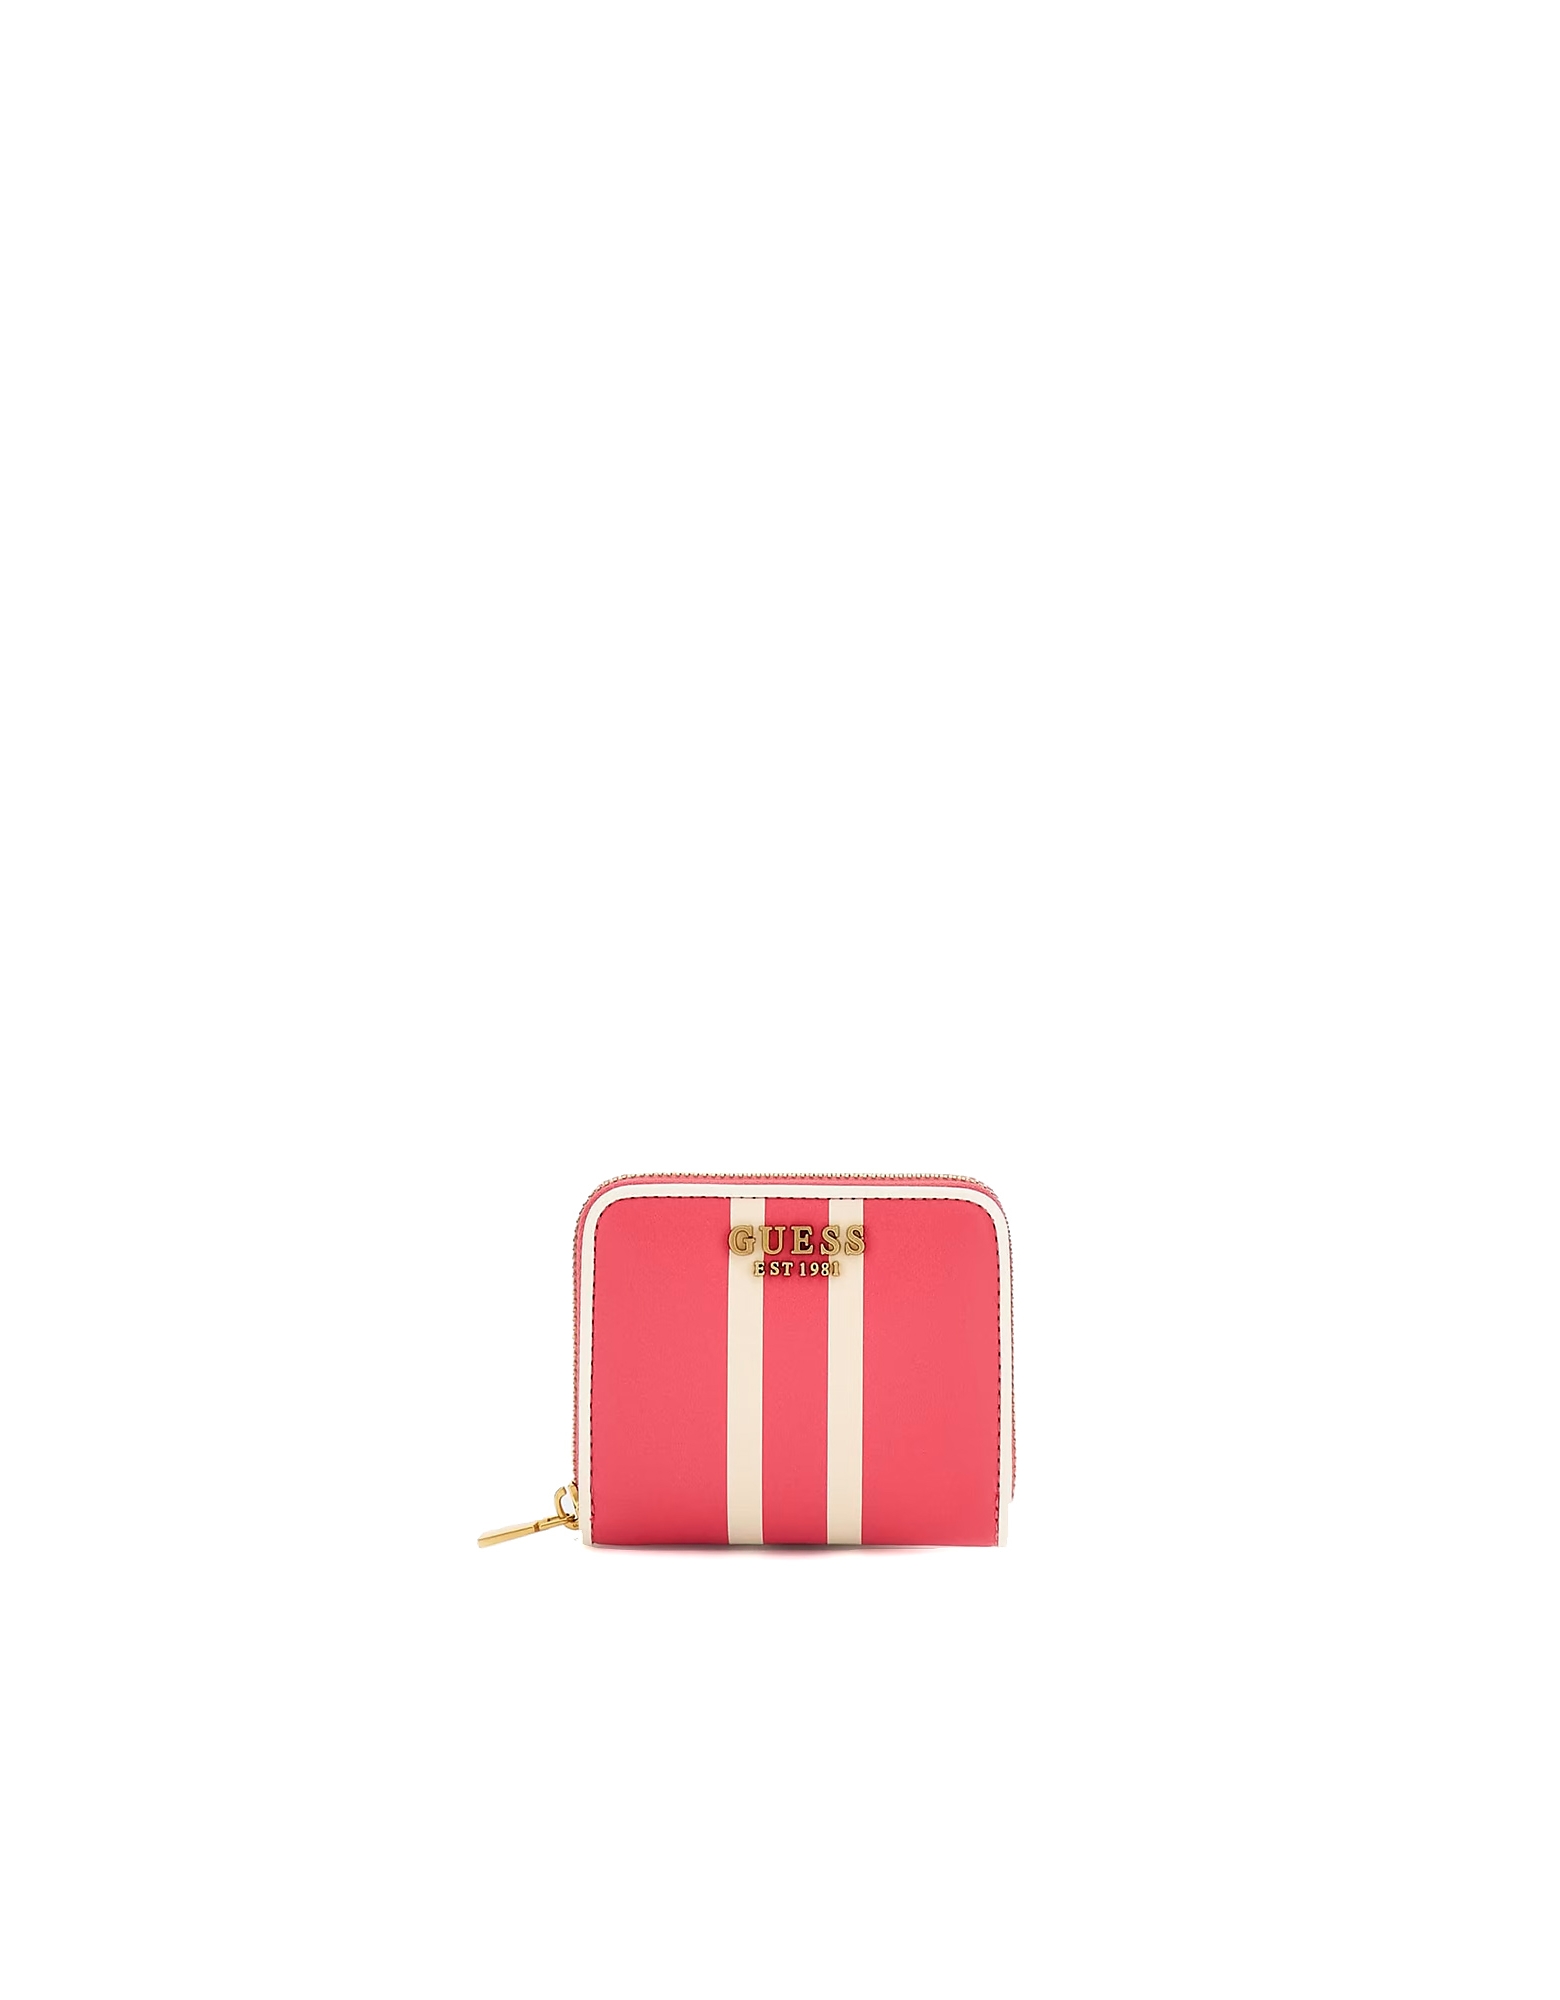 Guess Designer Wallets Women's Wallet In Pink